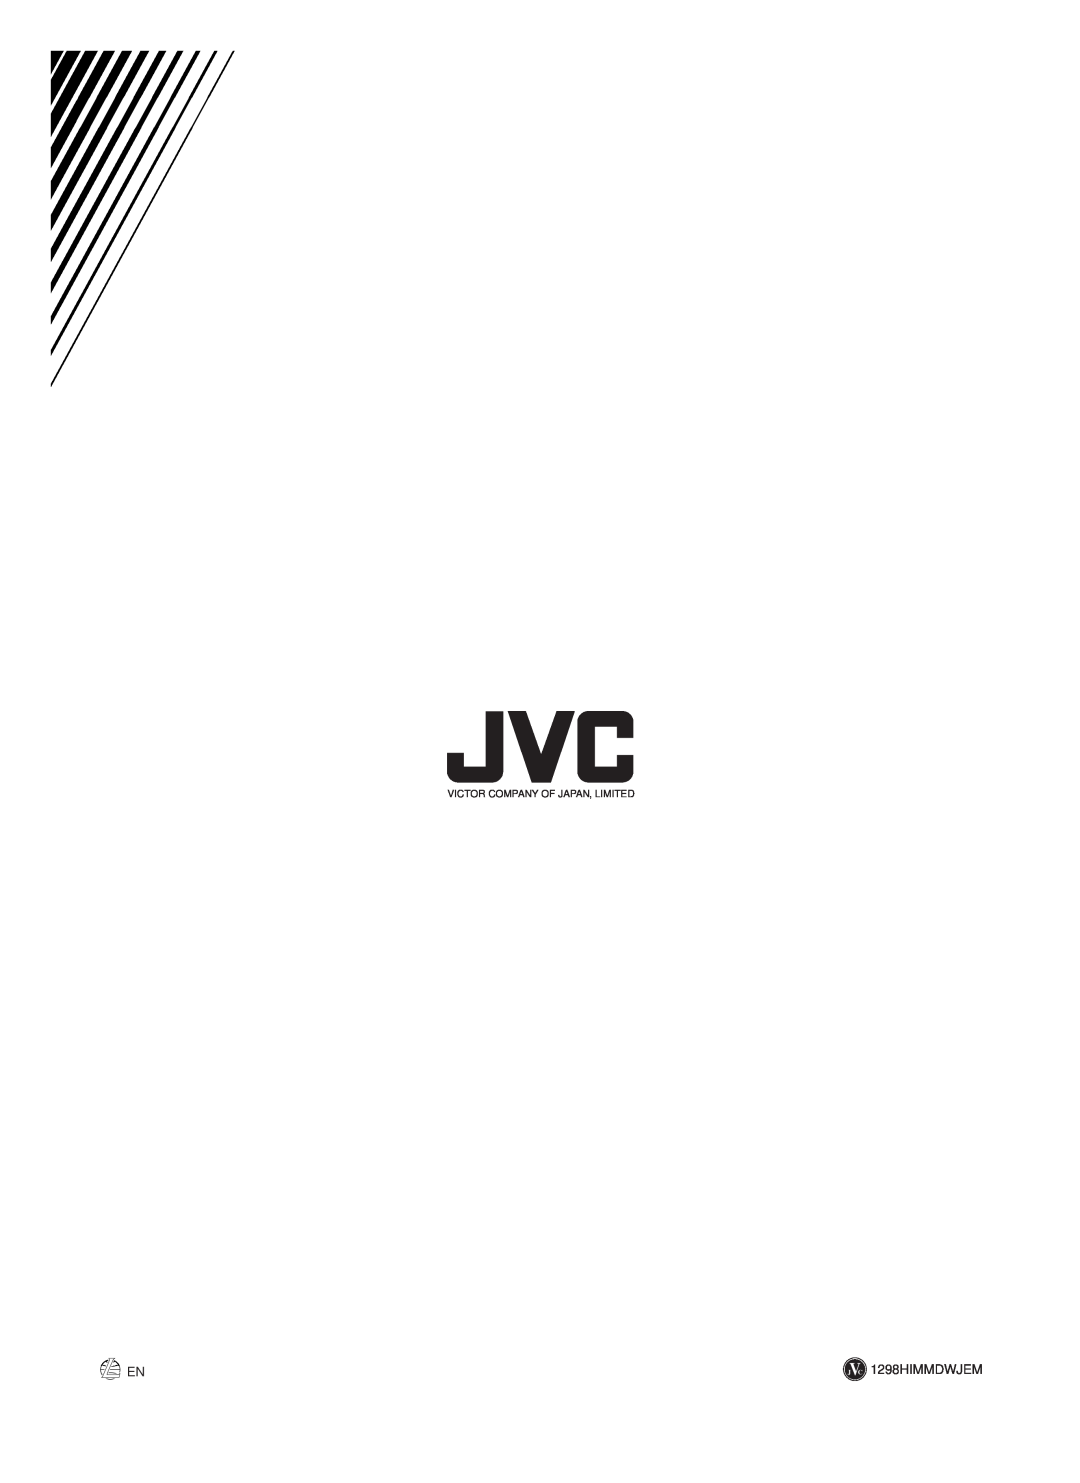 JVC RX-668VBK manual 1298HIMMDWJEM, Victor Company Of Japan, Limited 